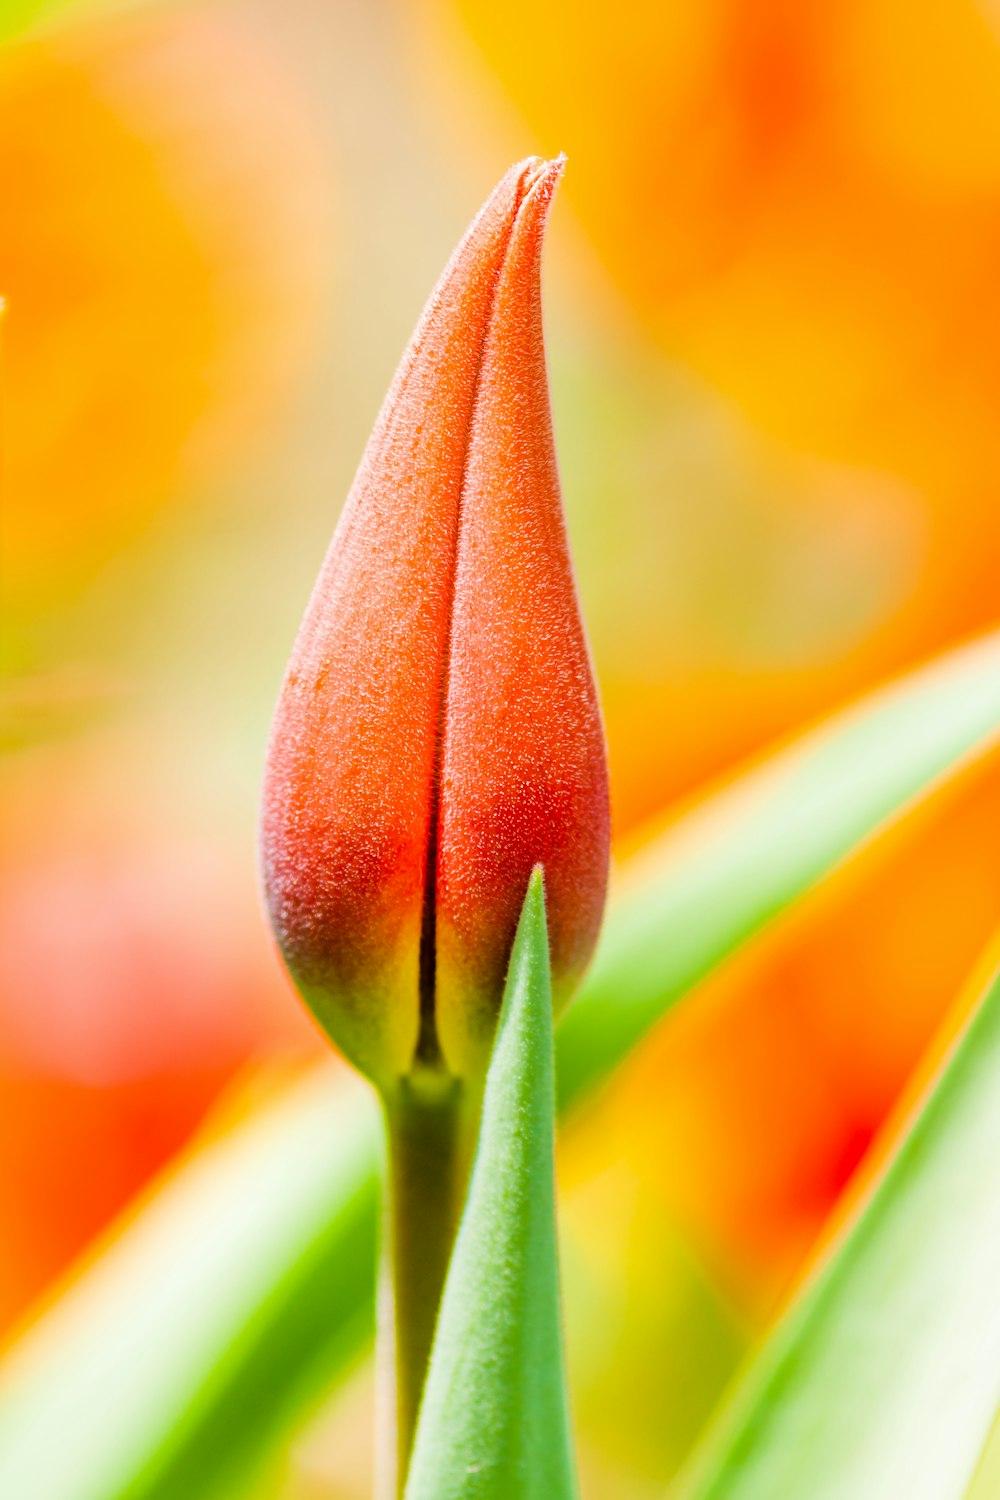 bourgeon de tulipe orange